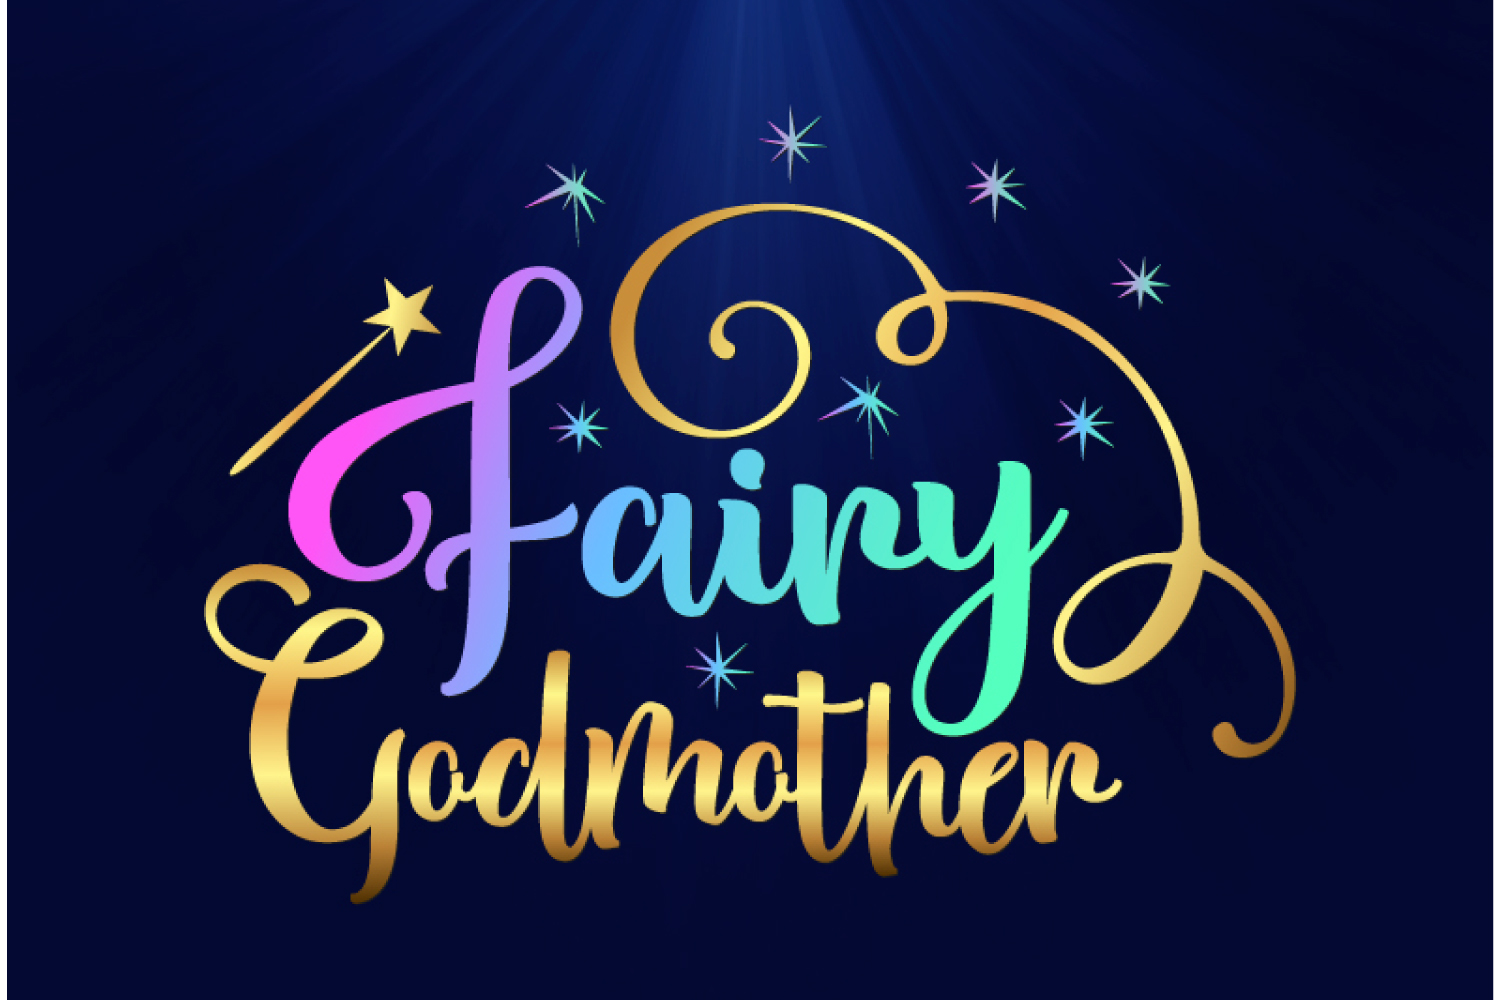 Download Fairy Godmother Cut File Baptism Sign Print & Cut PNG SVG